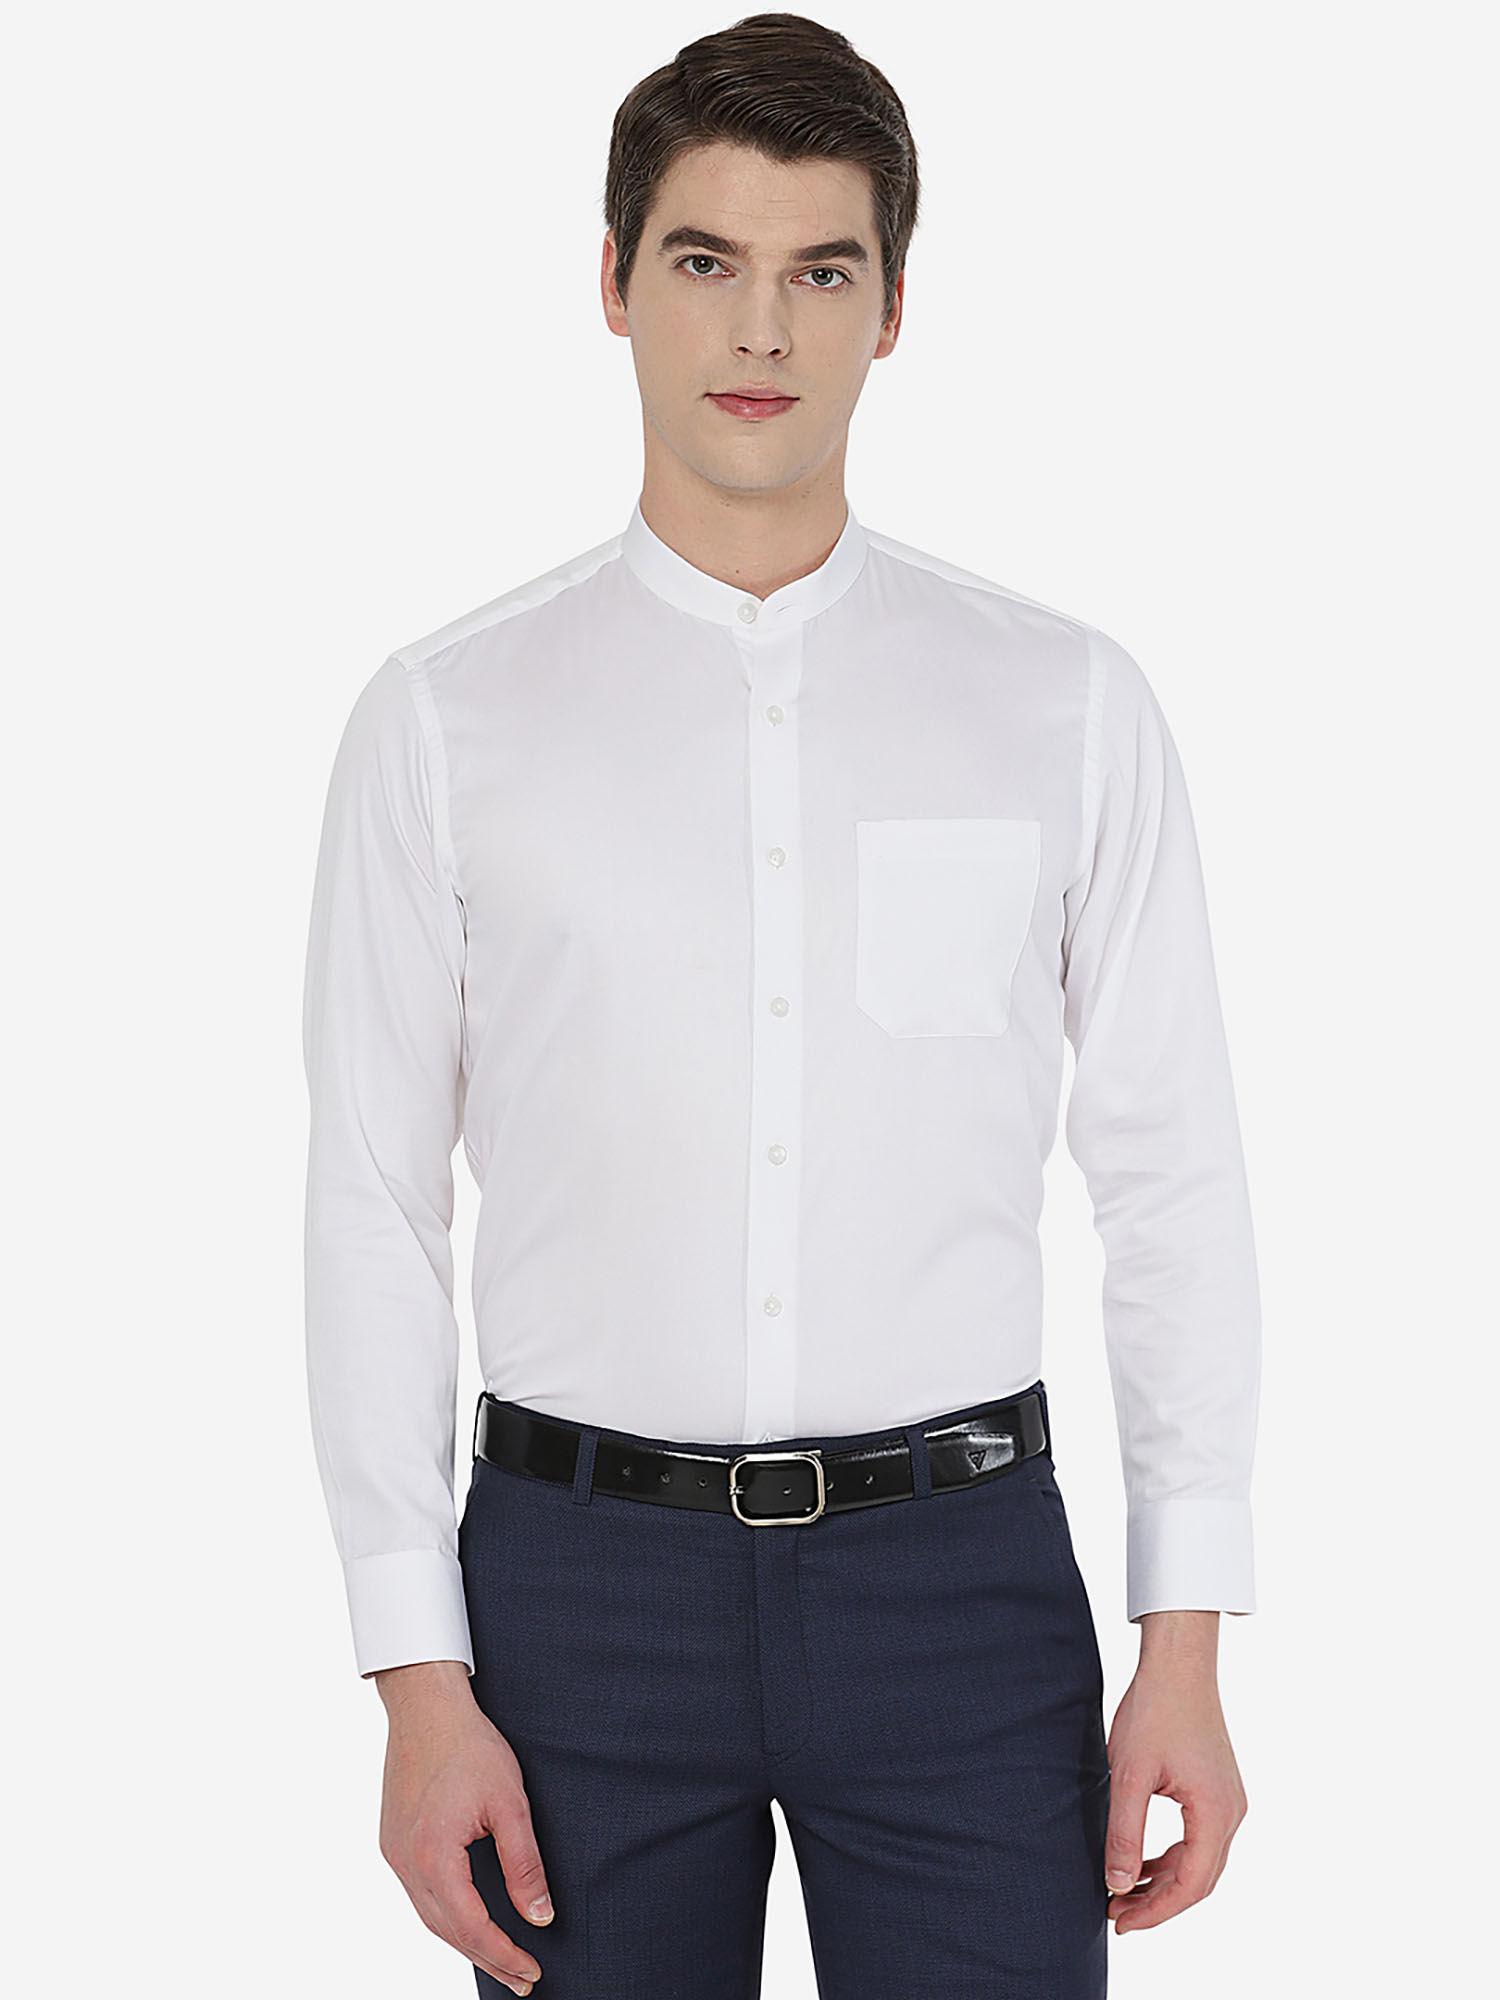 mens solid white cotton slim fit formal shirt